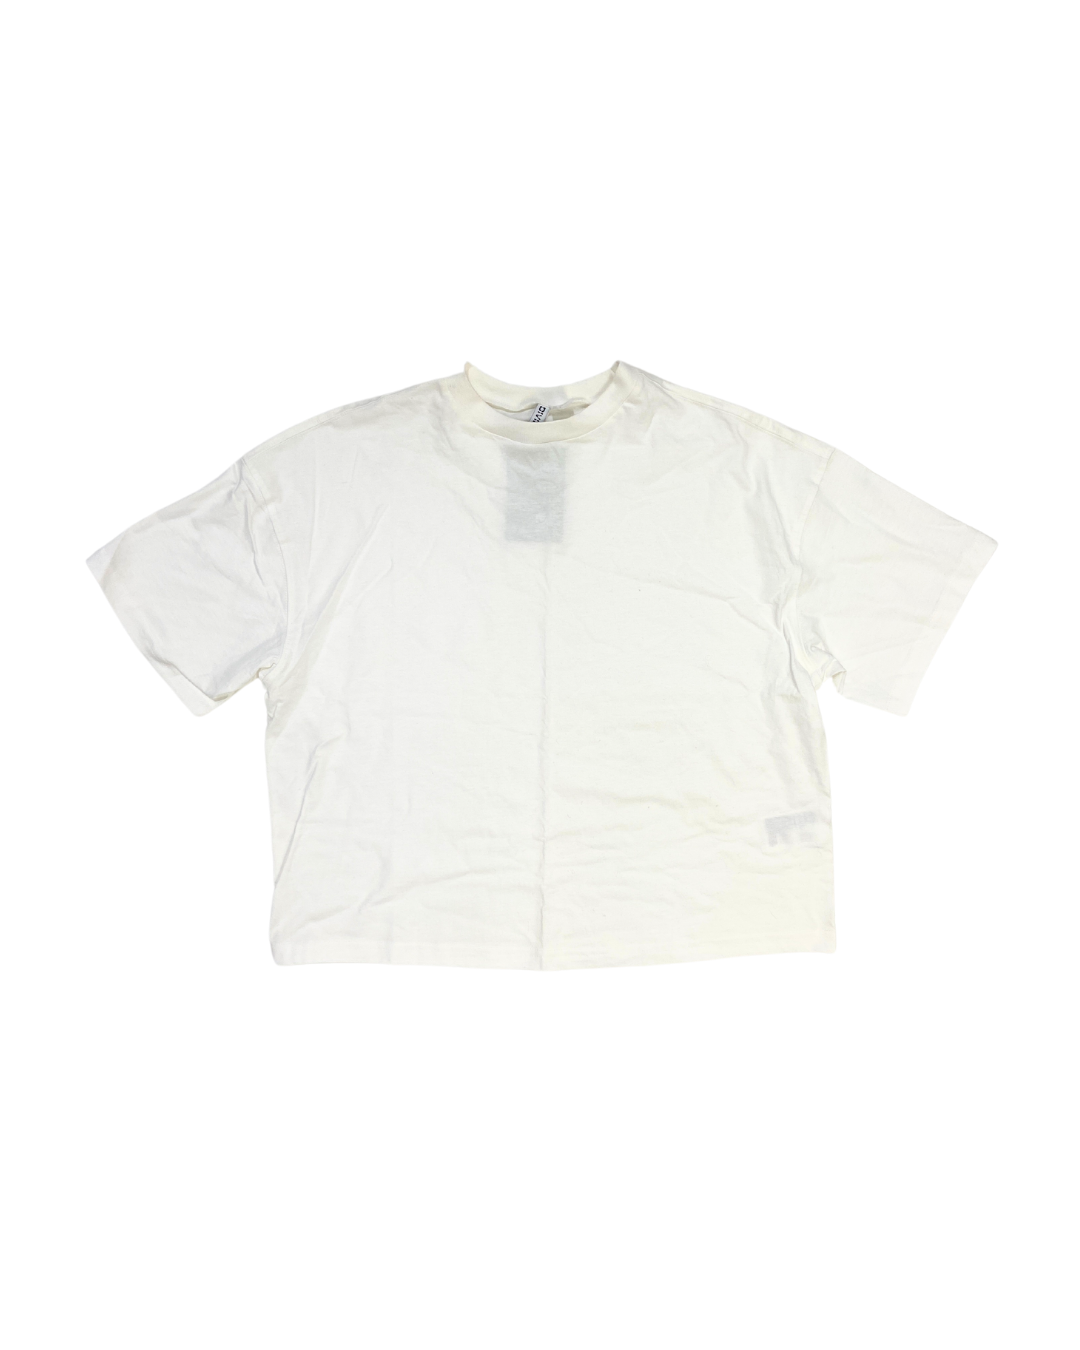 H&amp;M White T-Shirt